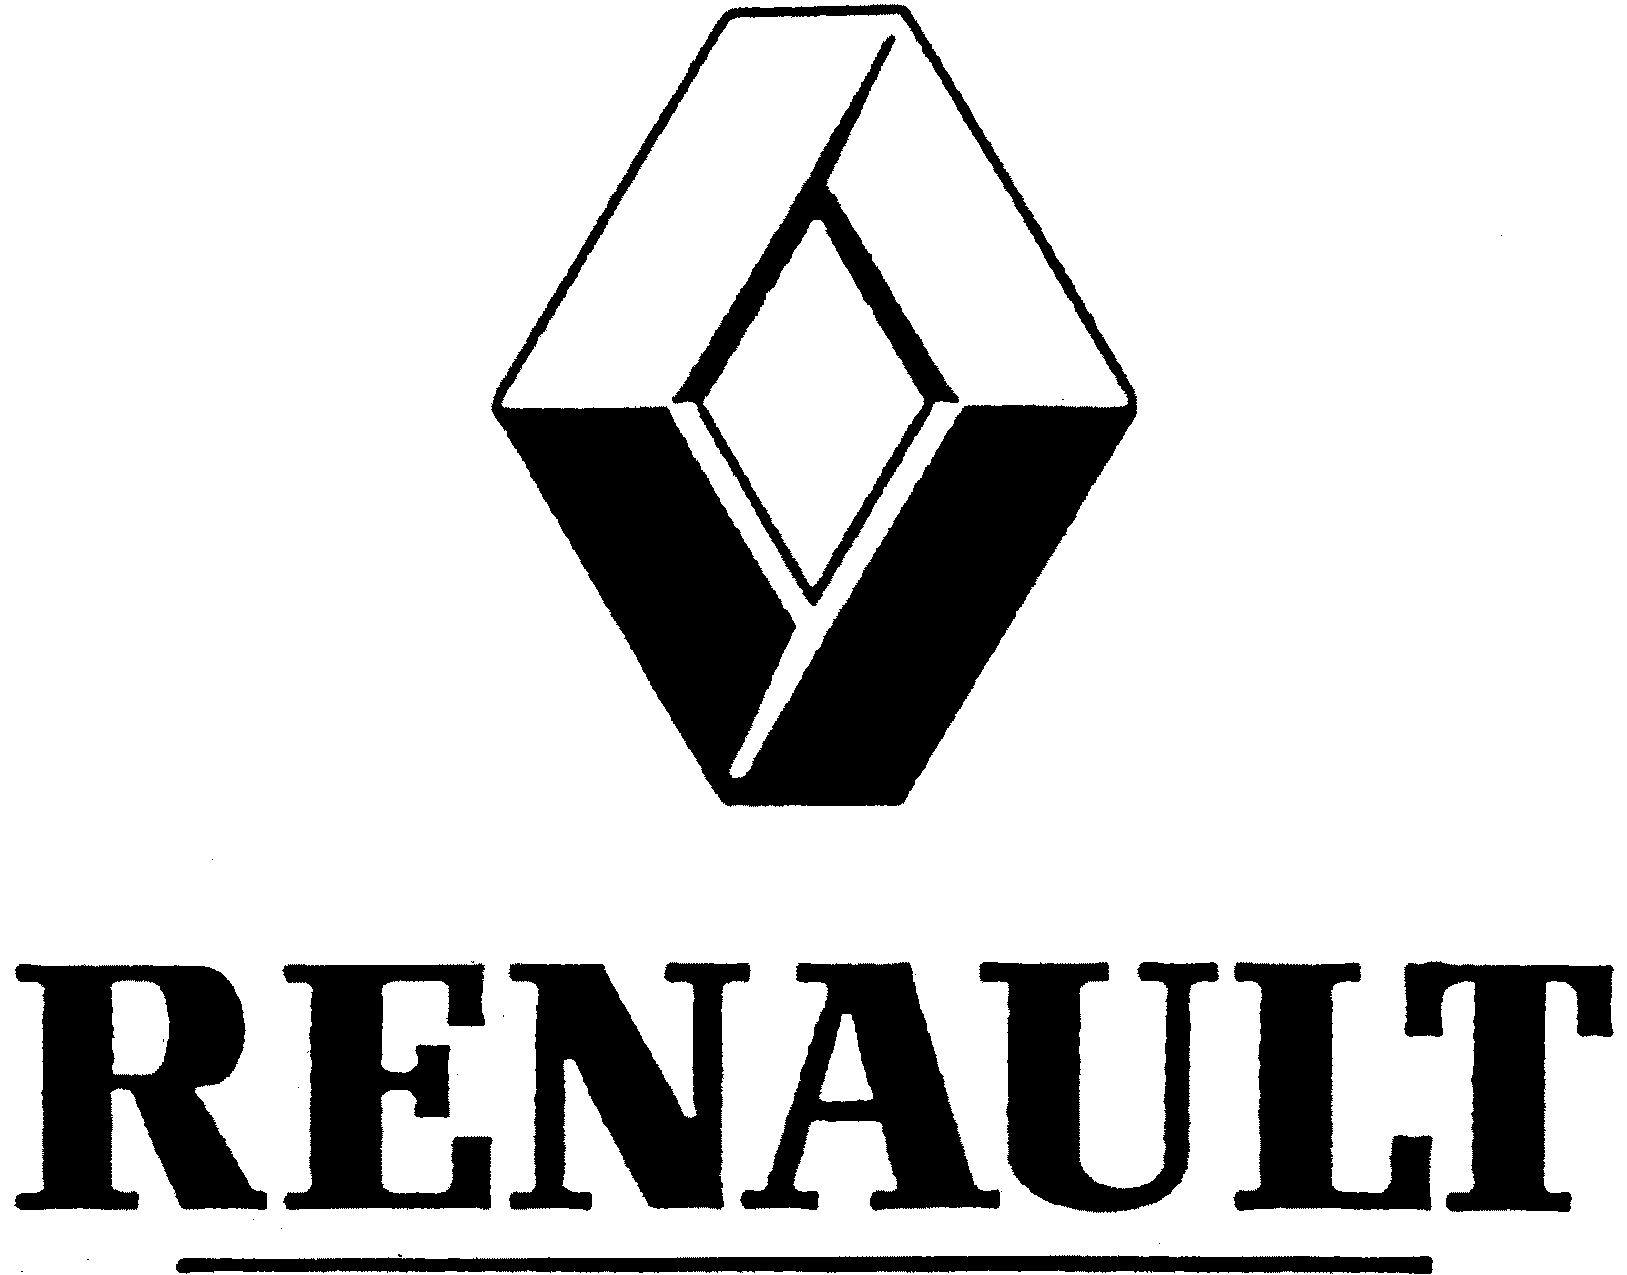 Trademark Logo RENAULT